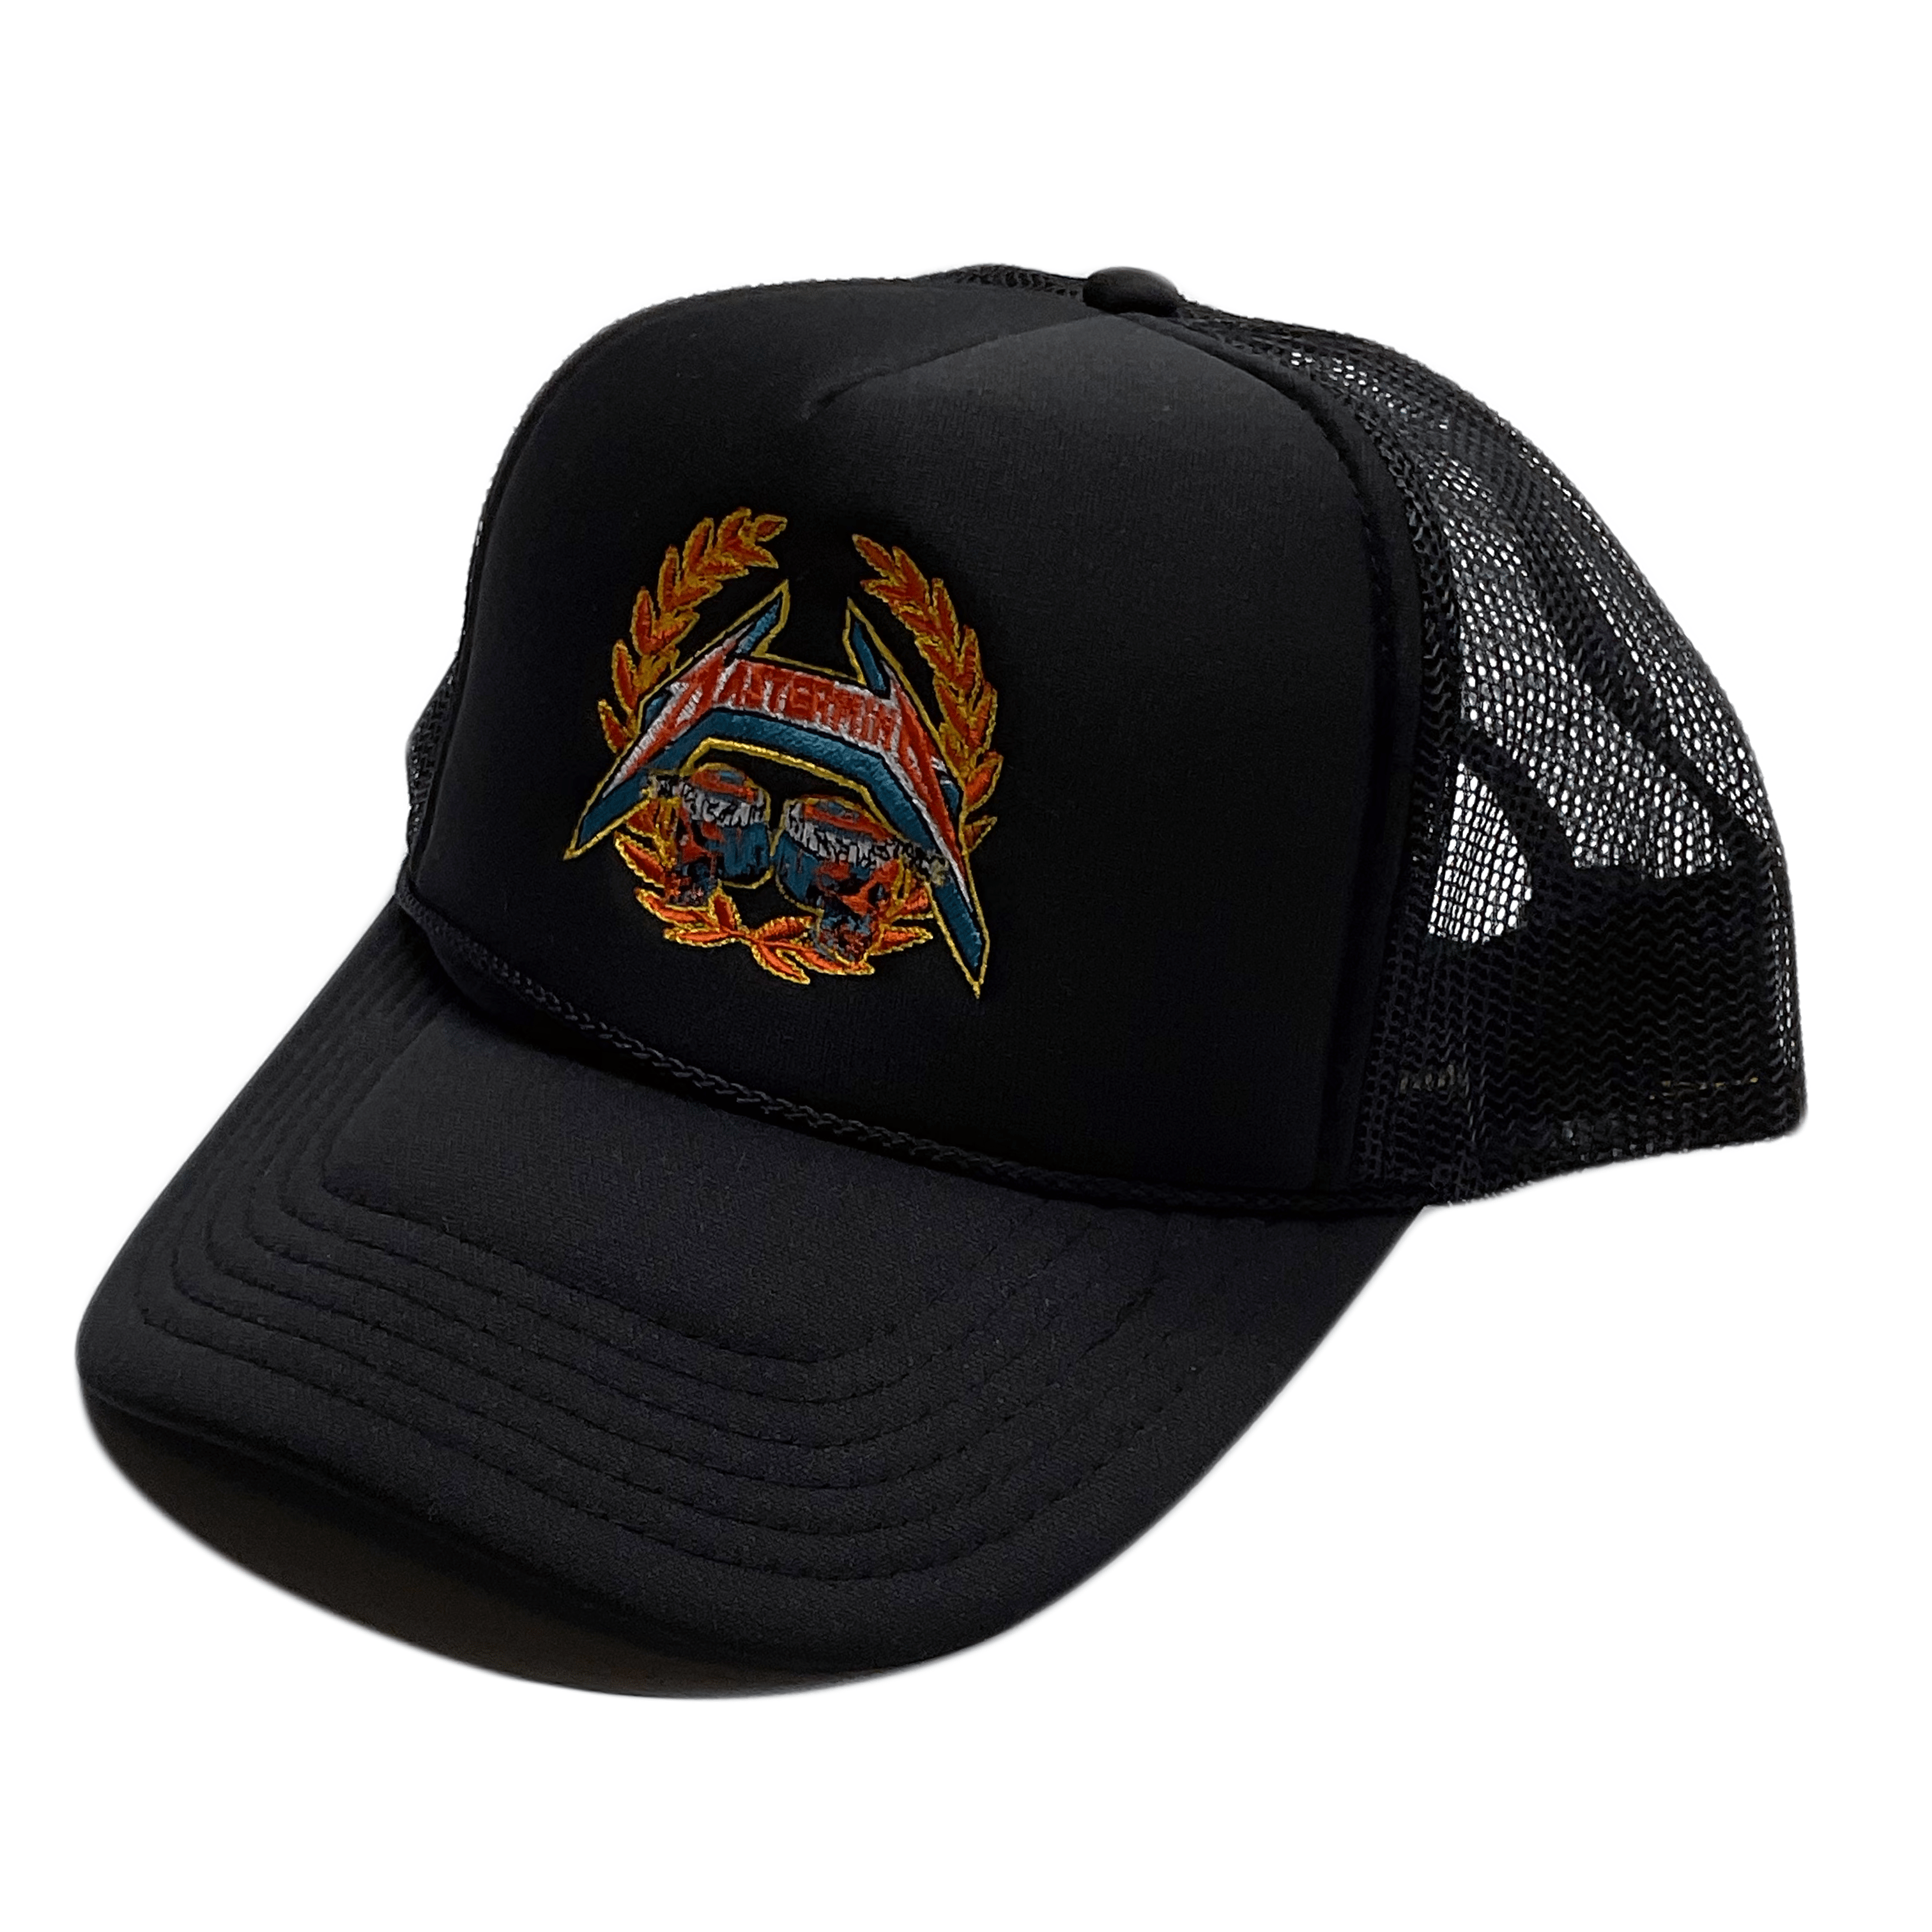 Mastermind315 Black Metallic trucker cap